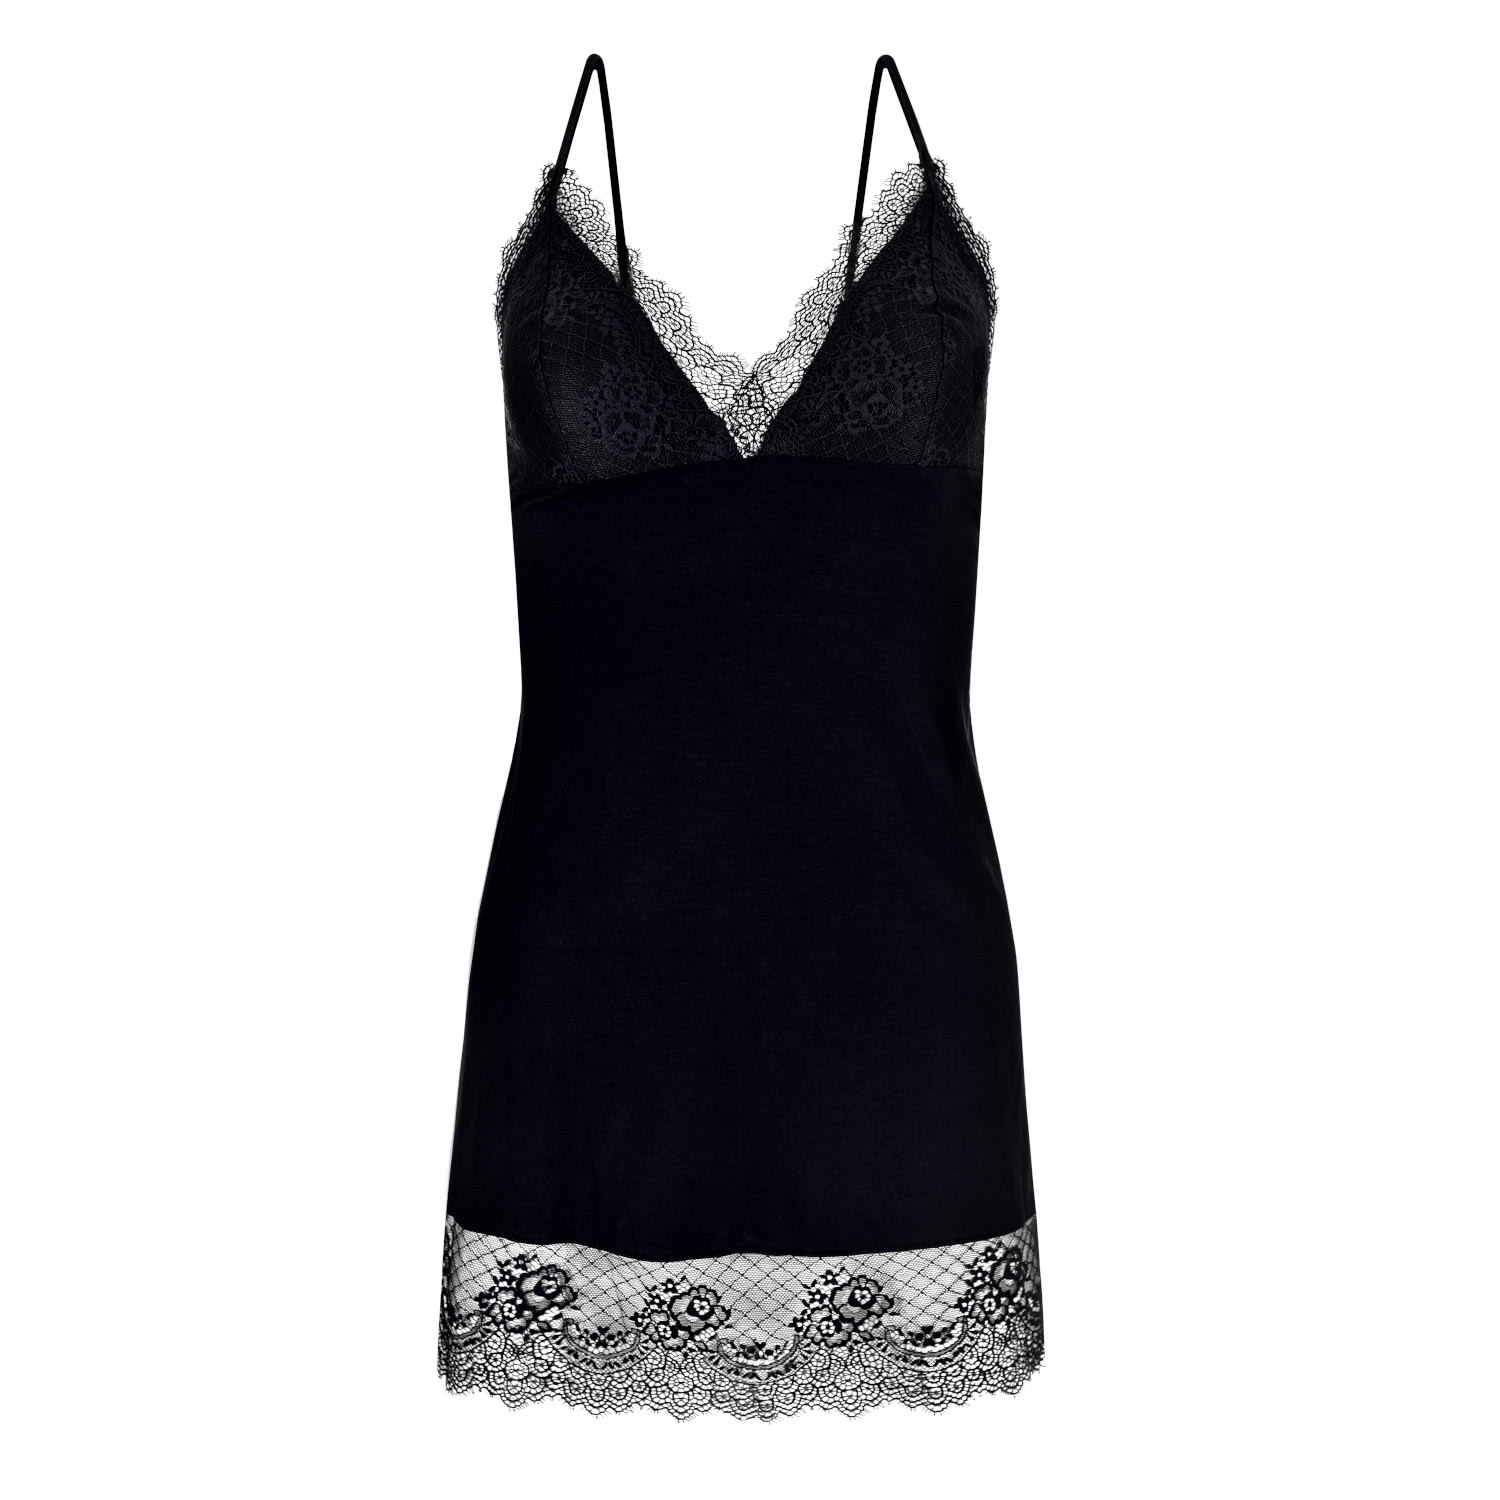 Oh!zuza Night&day Women's Black Lace Back Chemise Nightdress - Breathable Viscose & Soft Lace